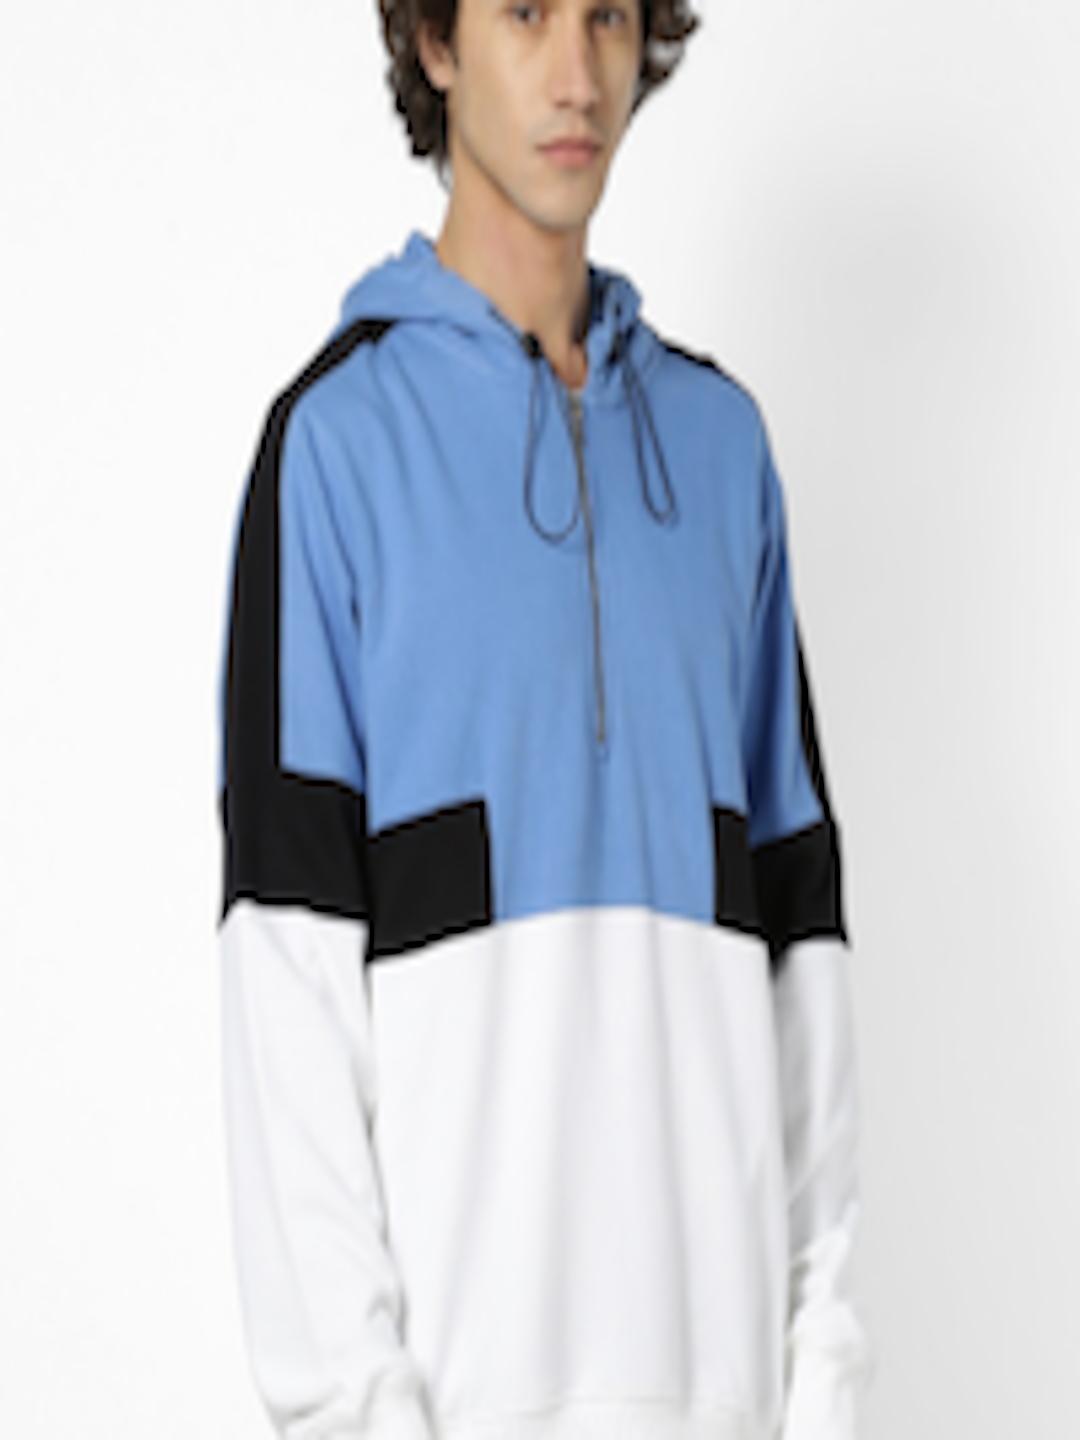 Buy Celio Men White & Blue Colourblocked Hooded Sweatshirt ...